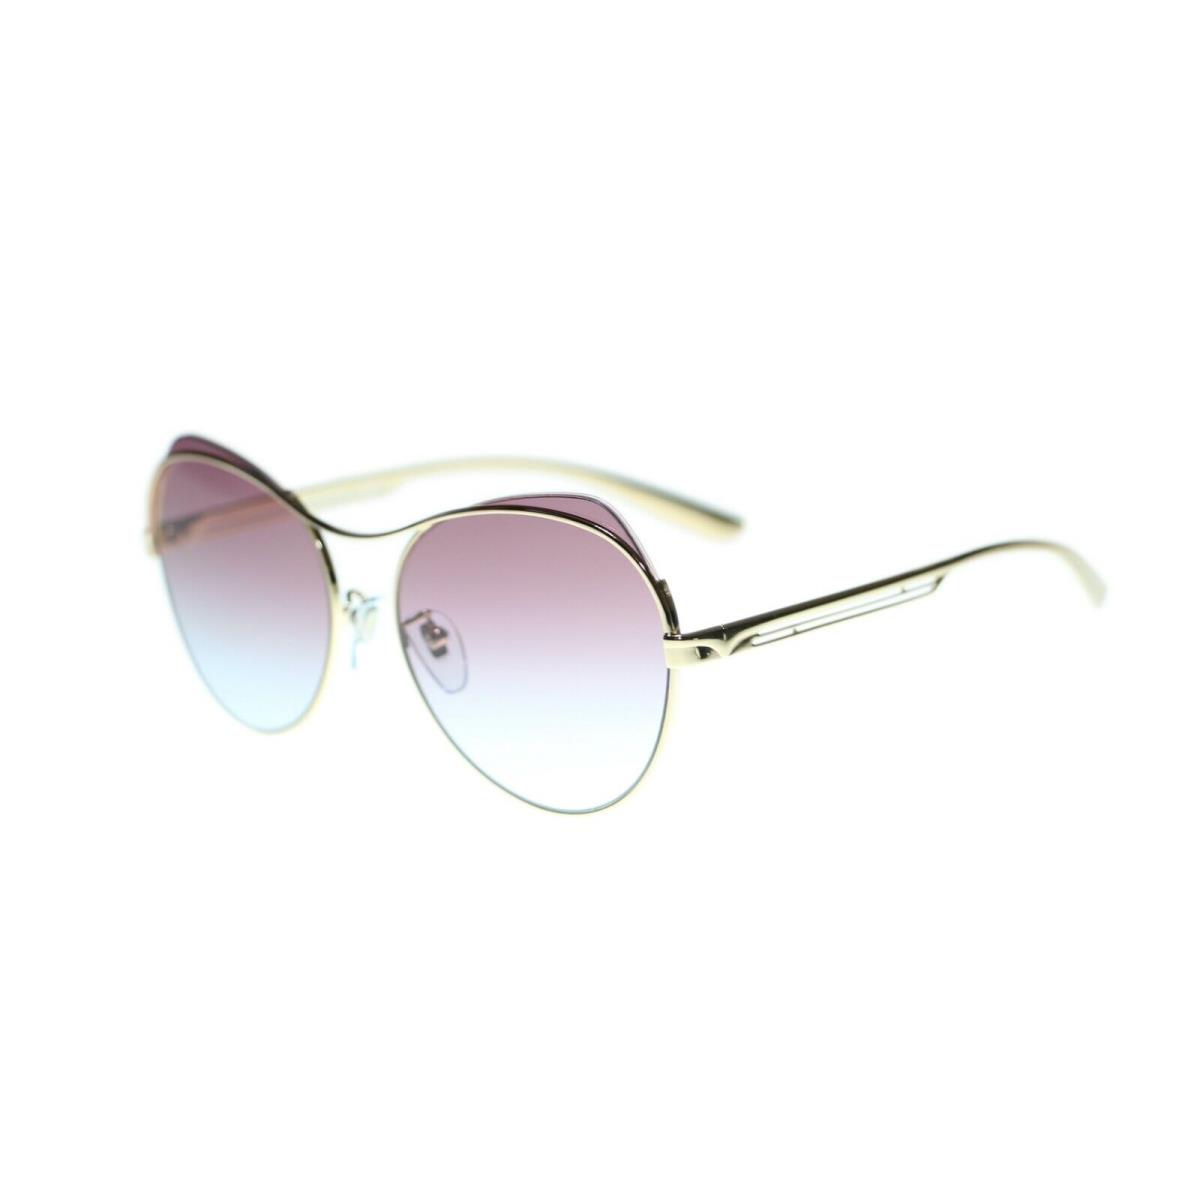 Bvlgari Women`s BV6120 Round Metal Frame Sunglasses 57mm 2014I8 Pink Gradient